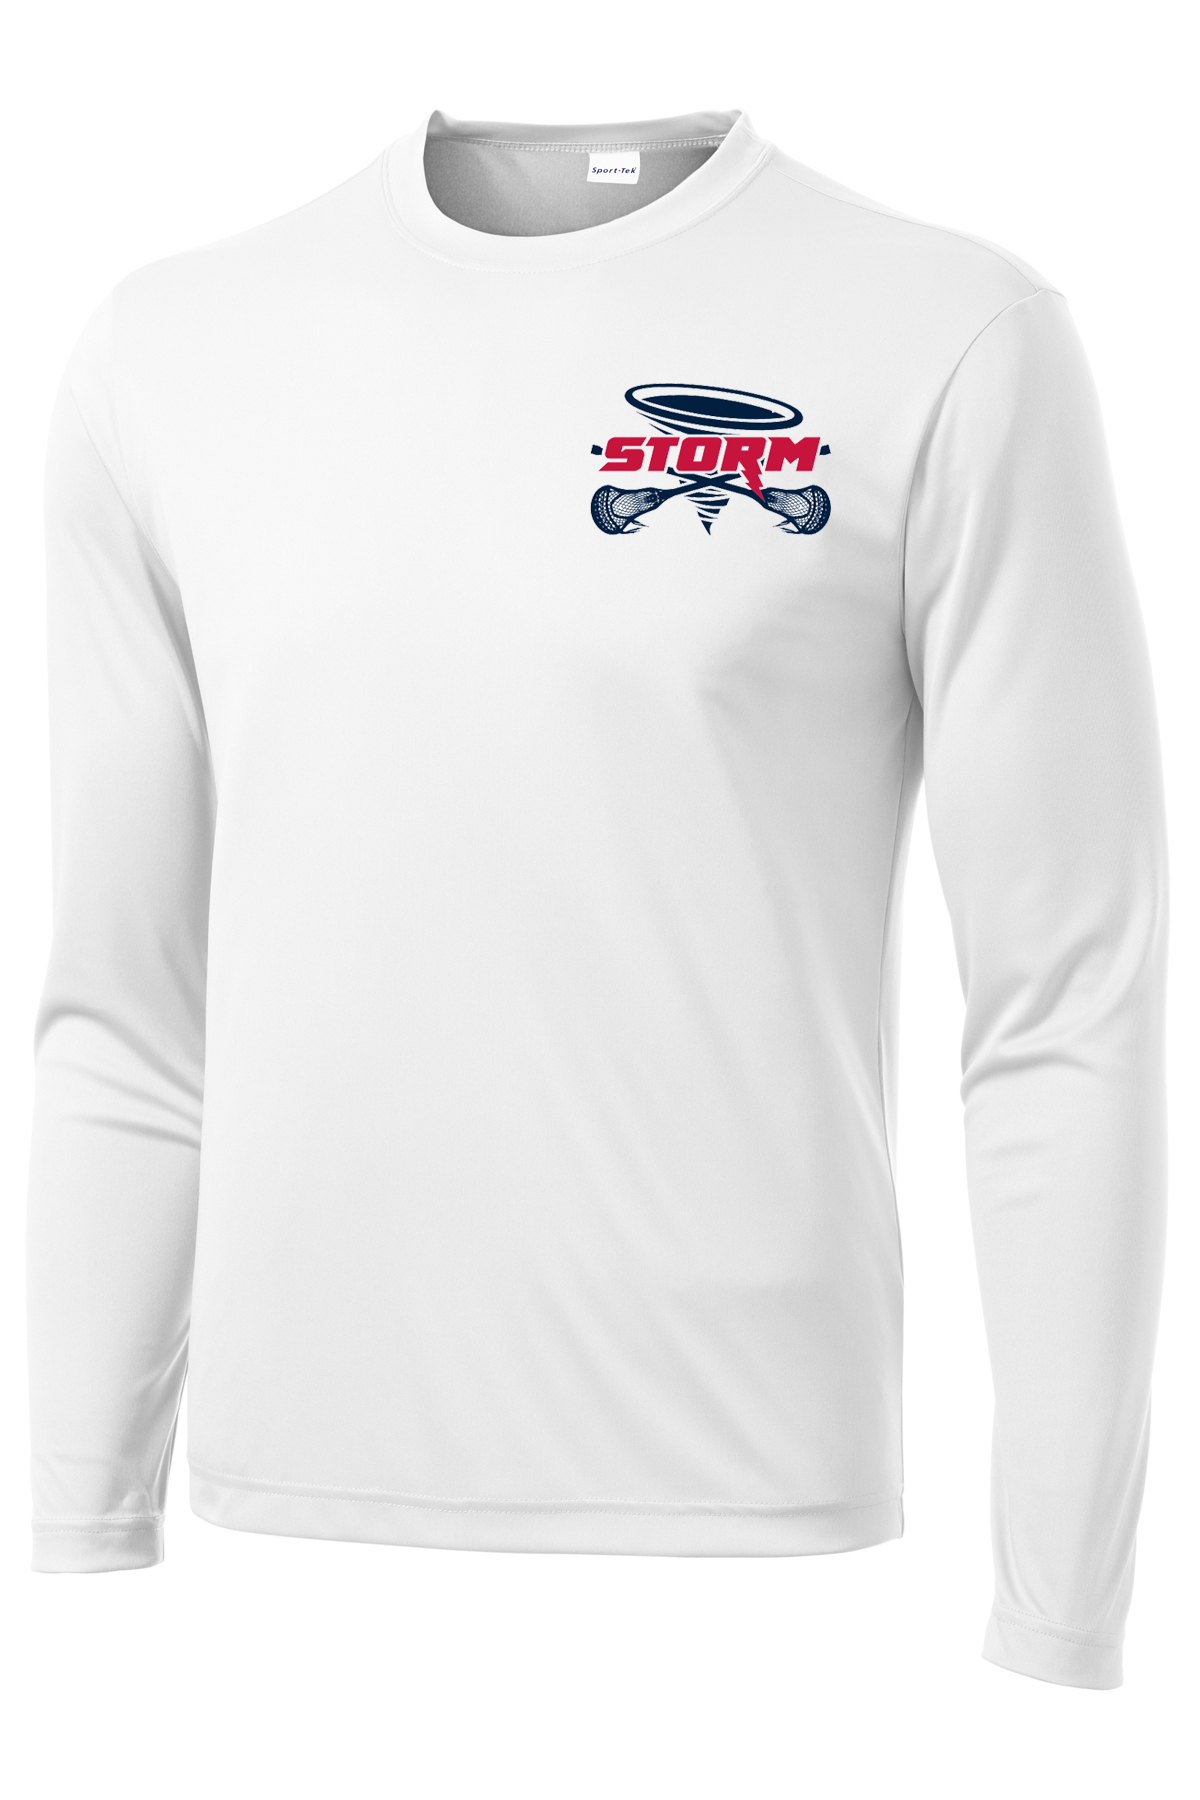 Oak Mountain Youth Lacrosse White Long Sleeve Performance Shirt